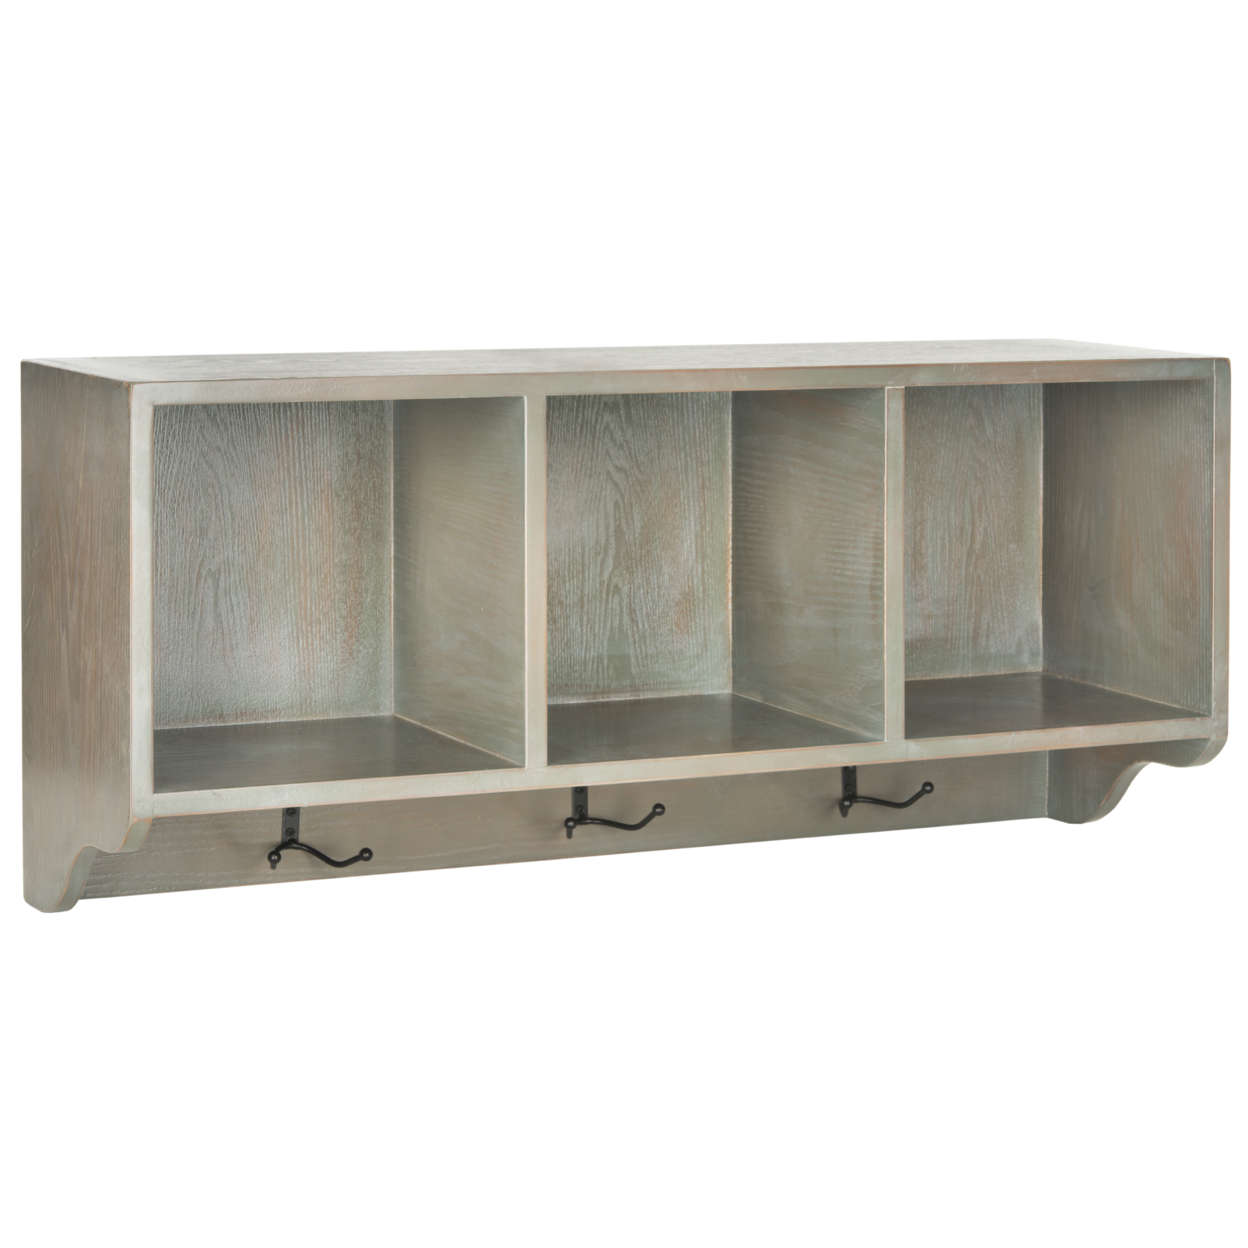 SAFAVIEH Alice Wall Shelf With Storage Compartments Ash Grey